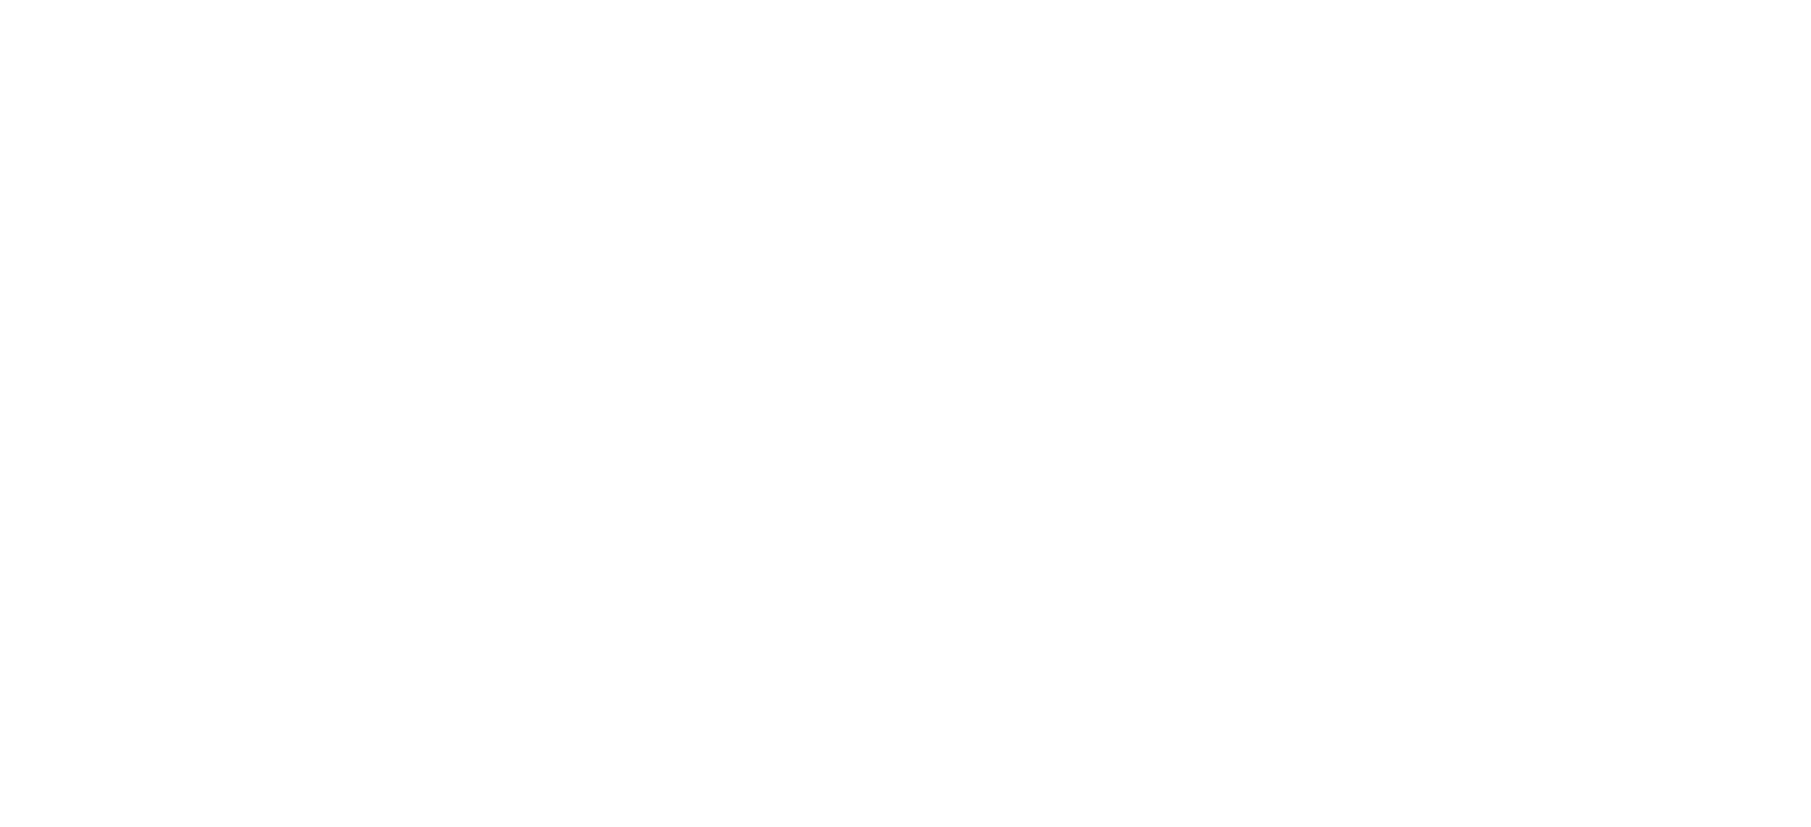 pfizerr